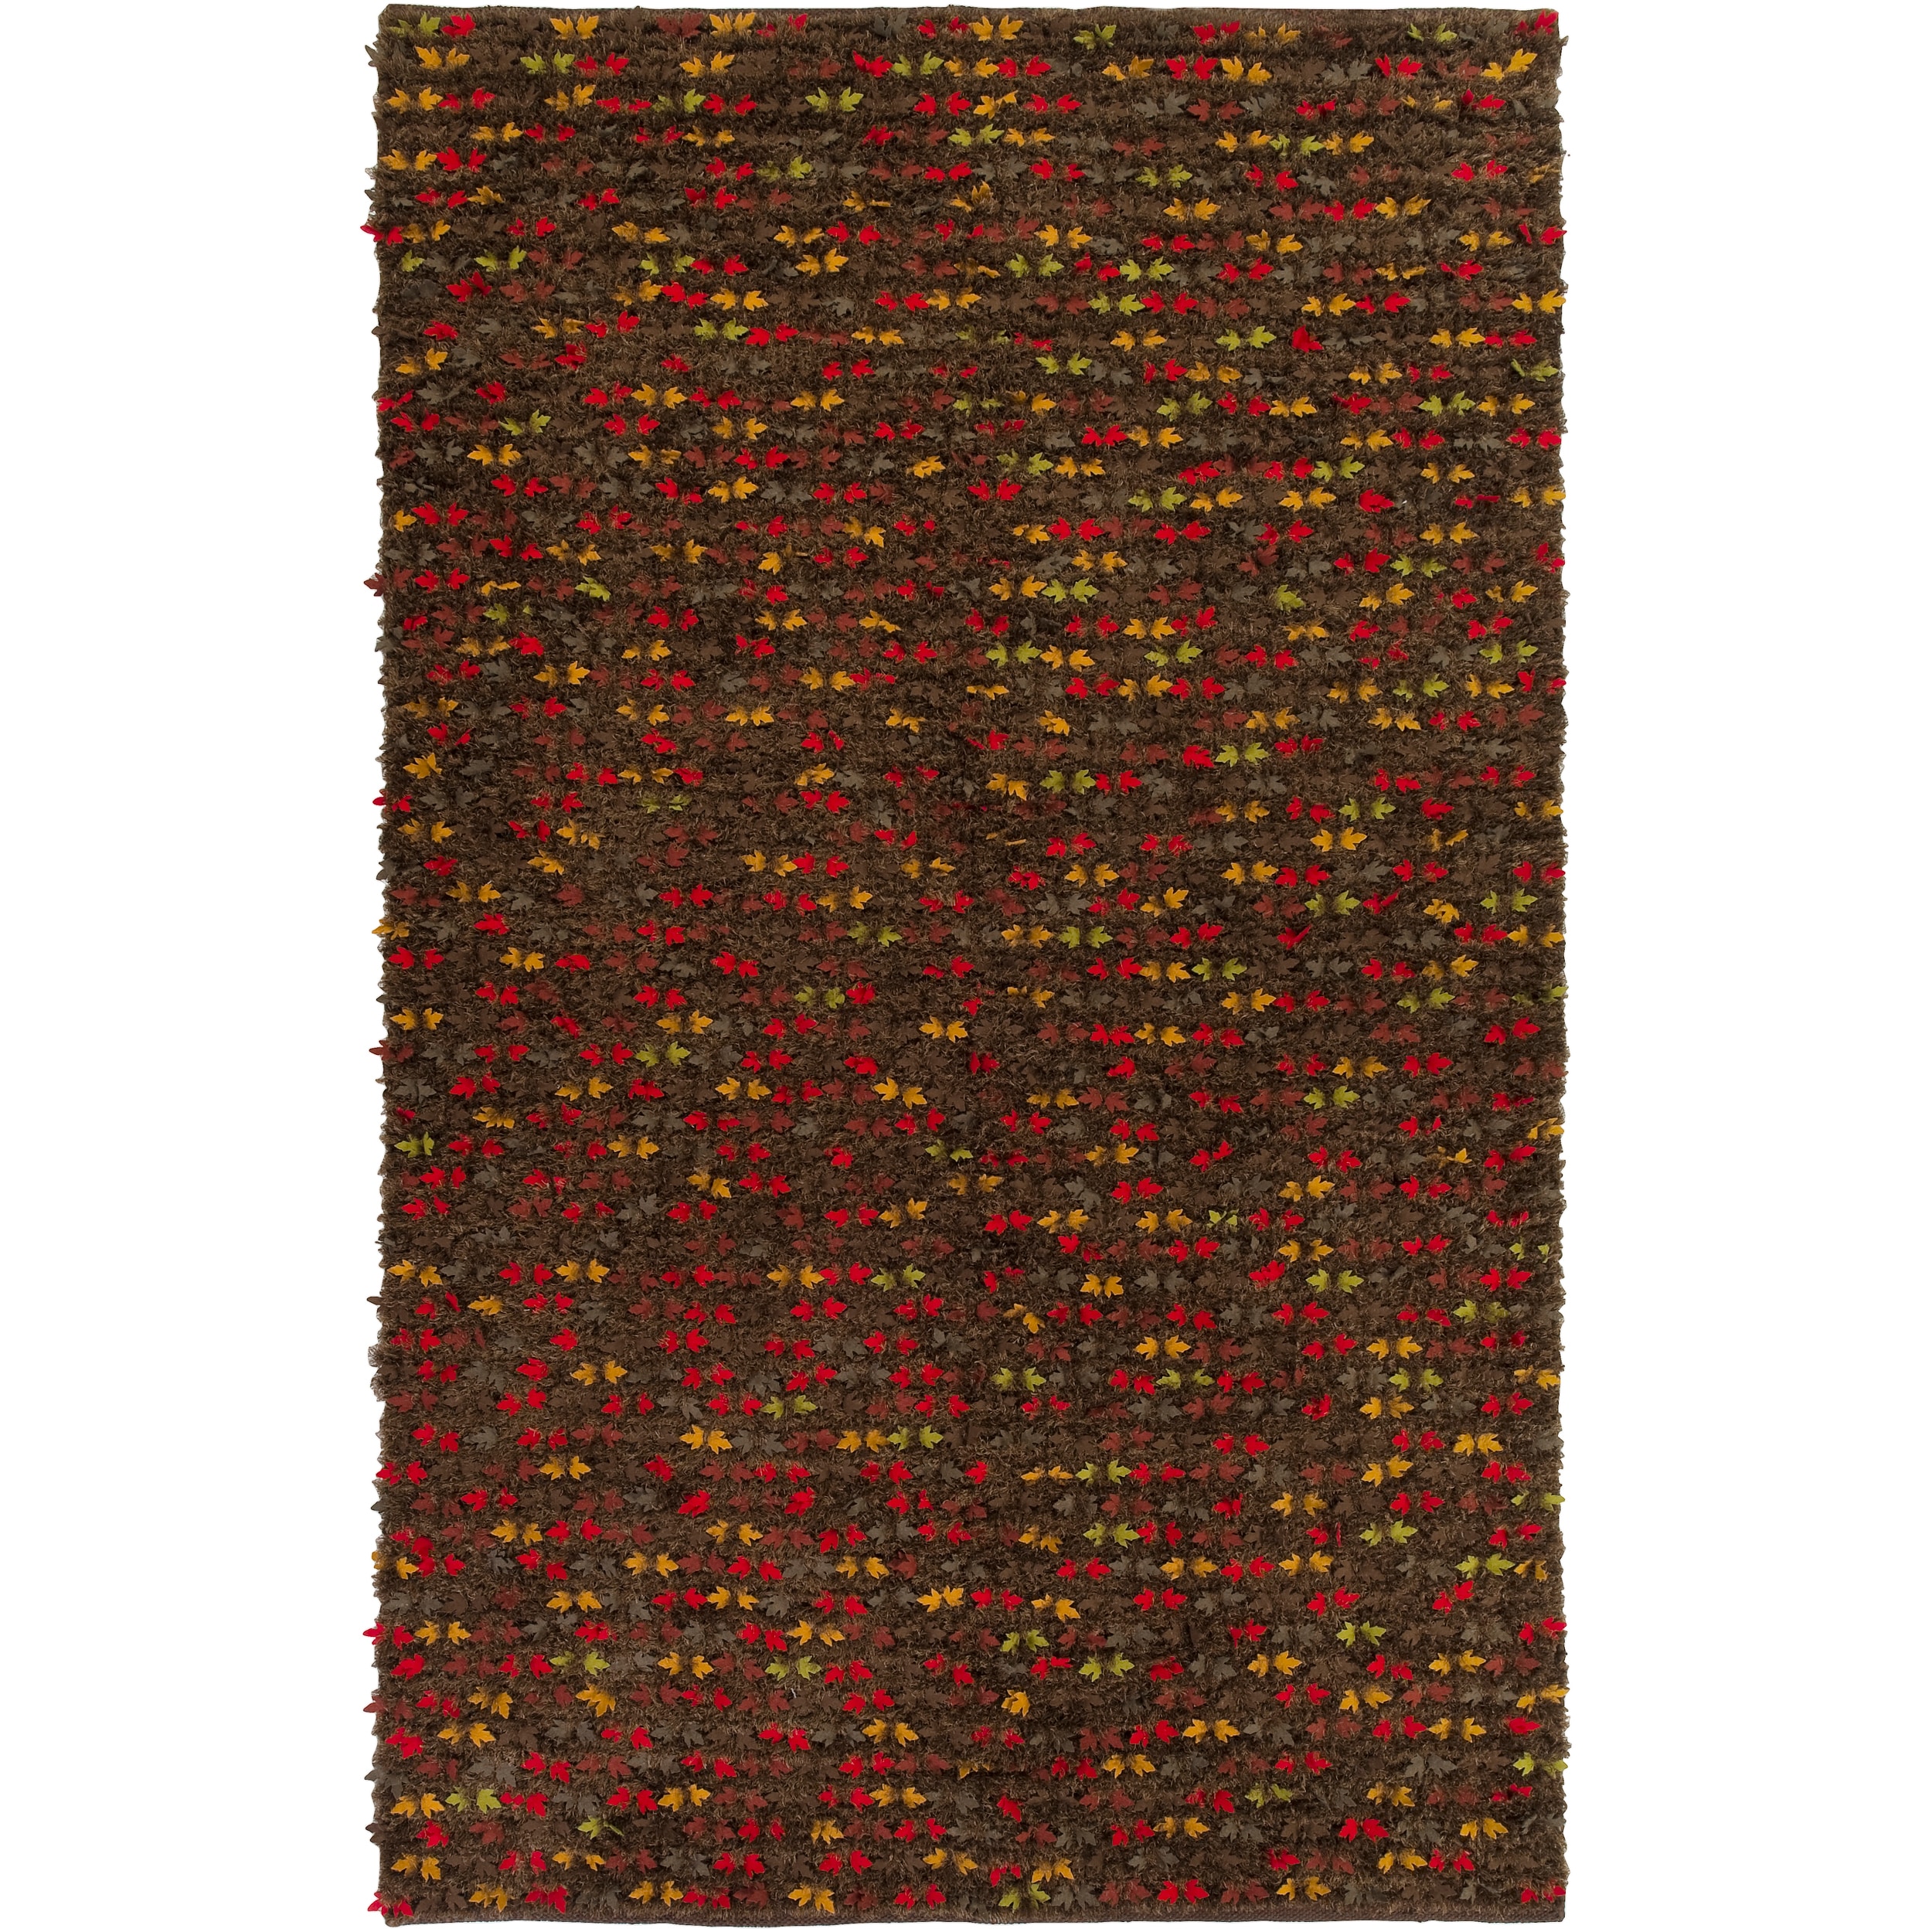 Hand woven Multi Coloredcolored Calurnet Fall Leaves Shag Zealand Wool Rug (2 X 3)